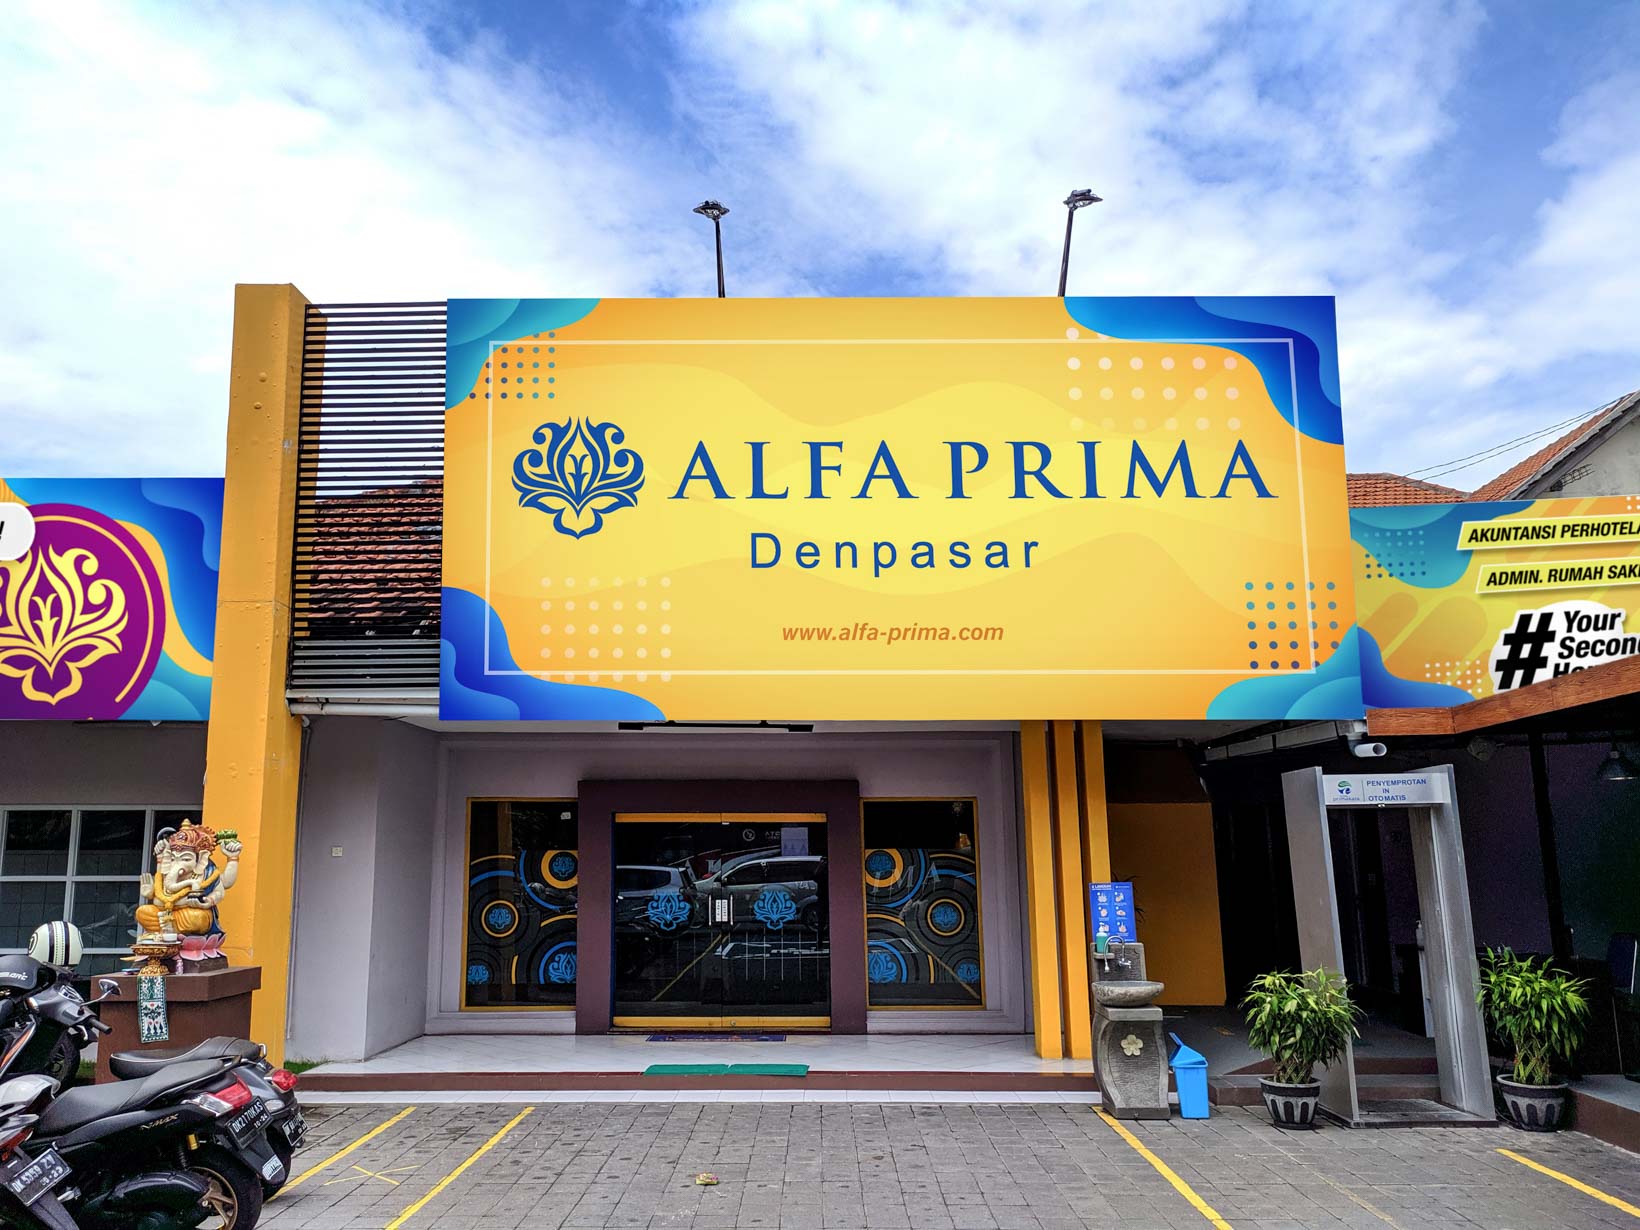 Alfa Prima Denpasar